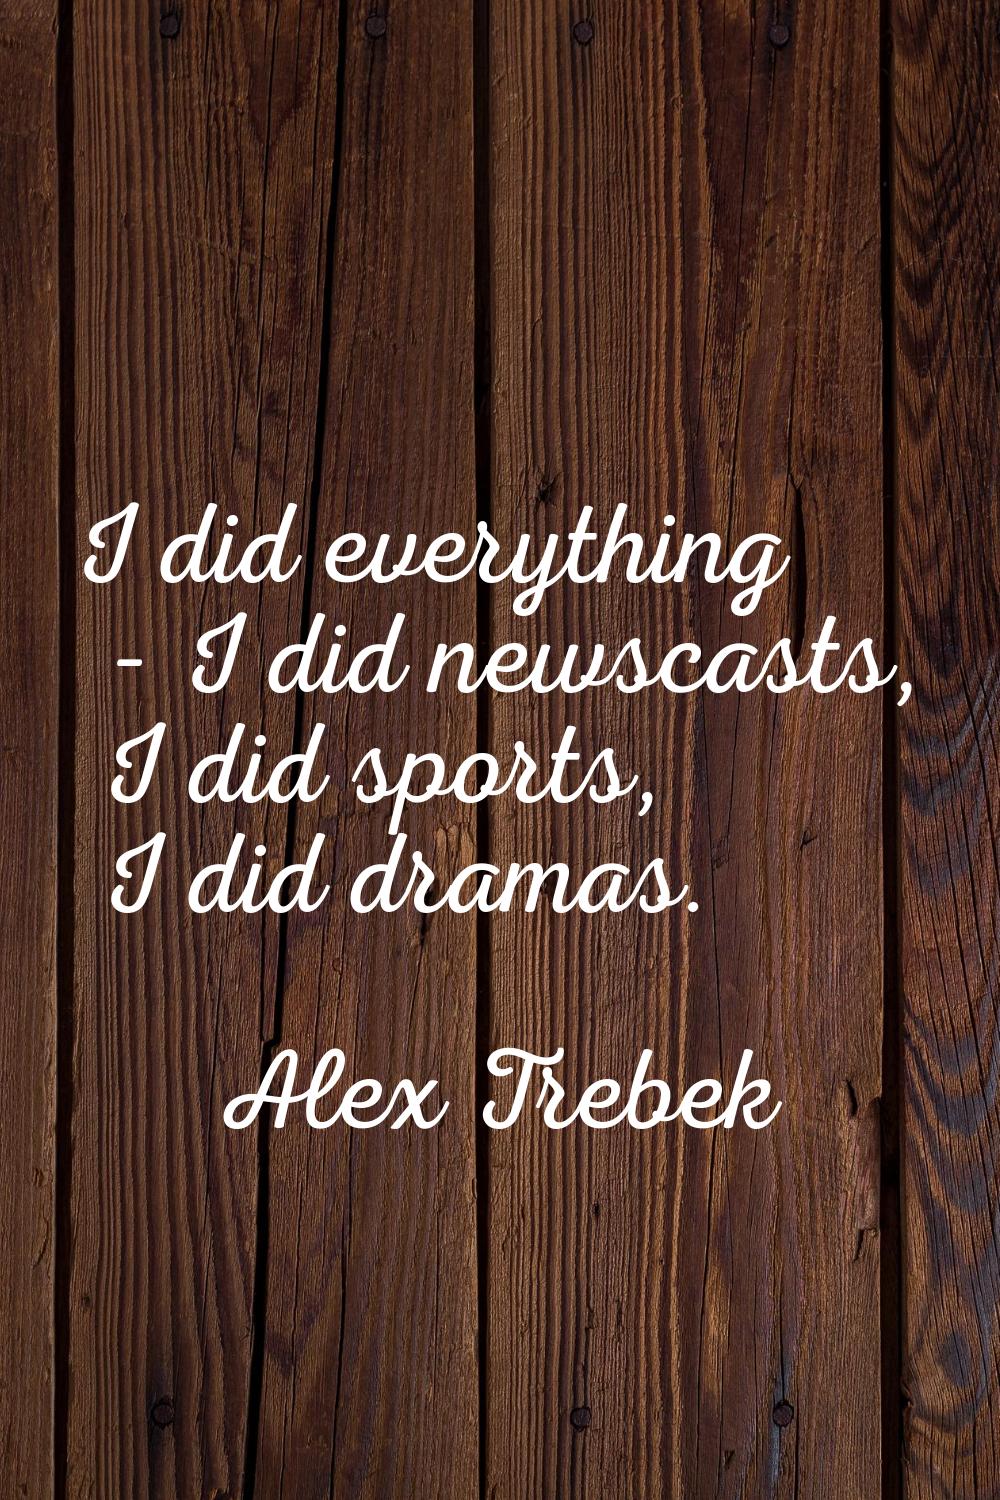 I did everything - I did newscasts, I did sports, I did dramas.